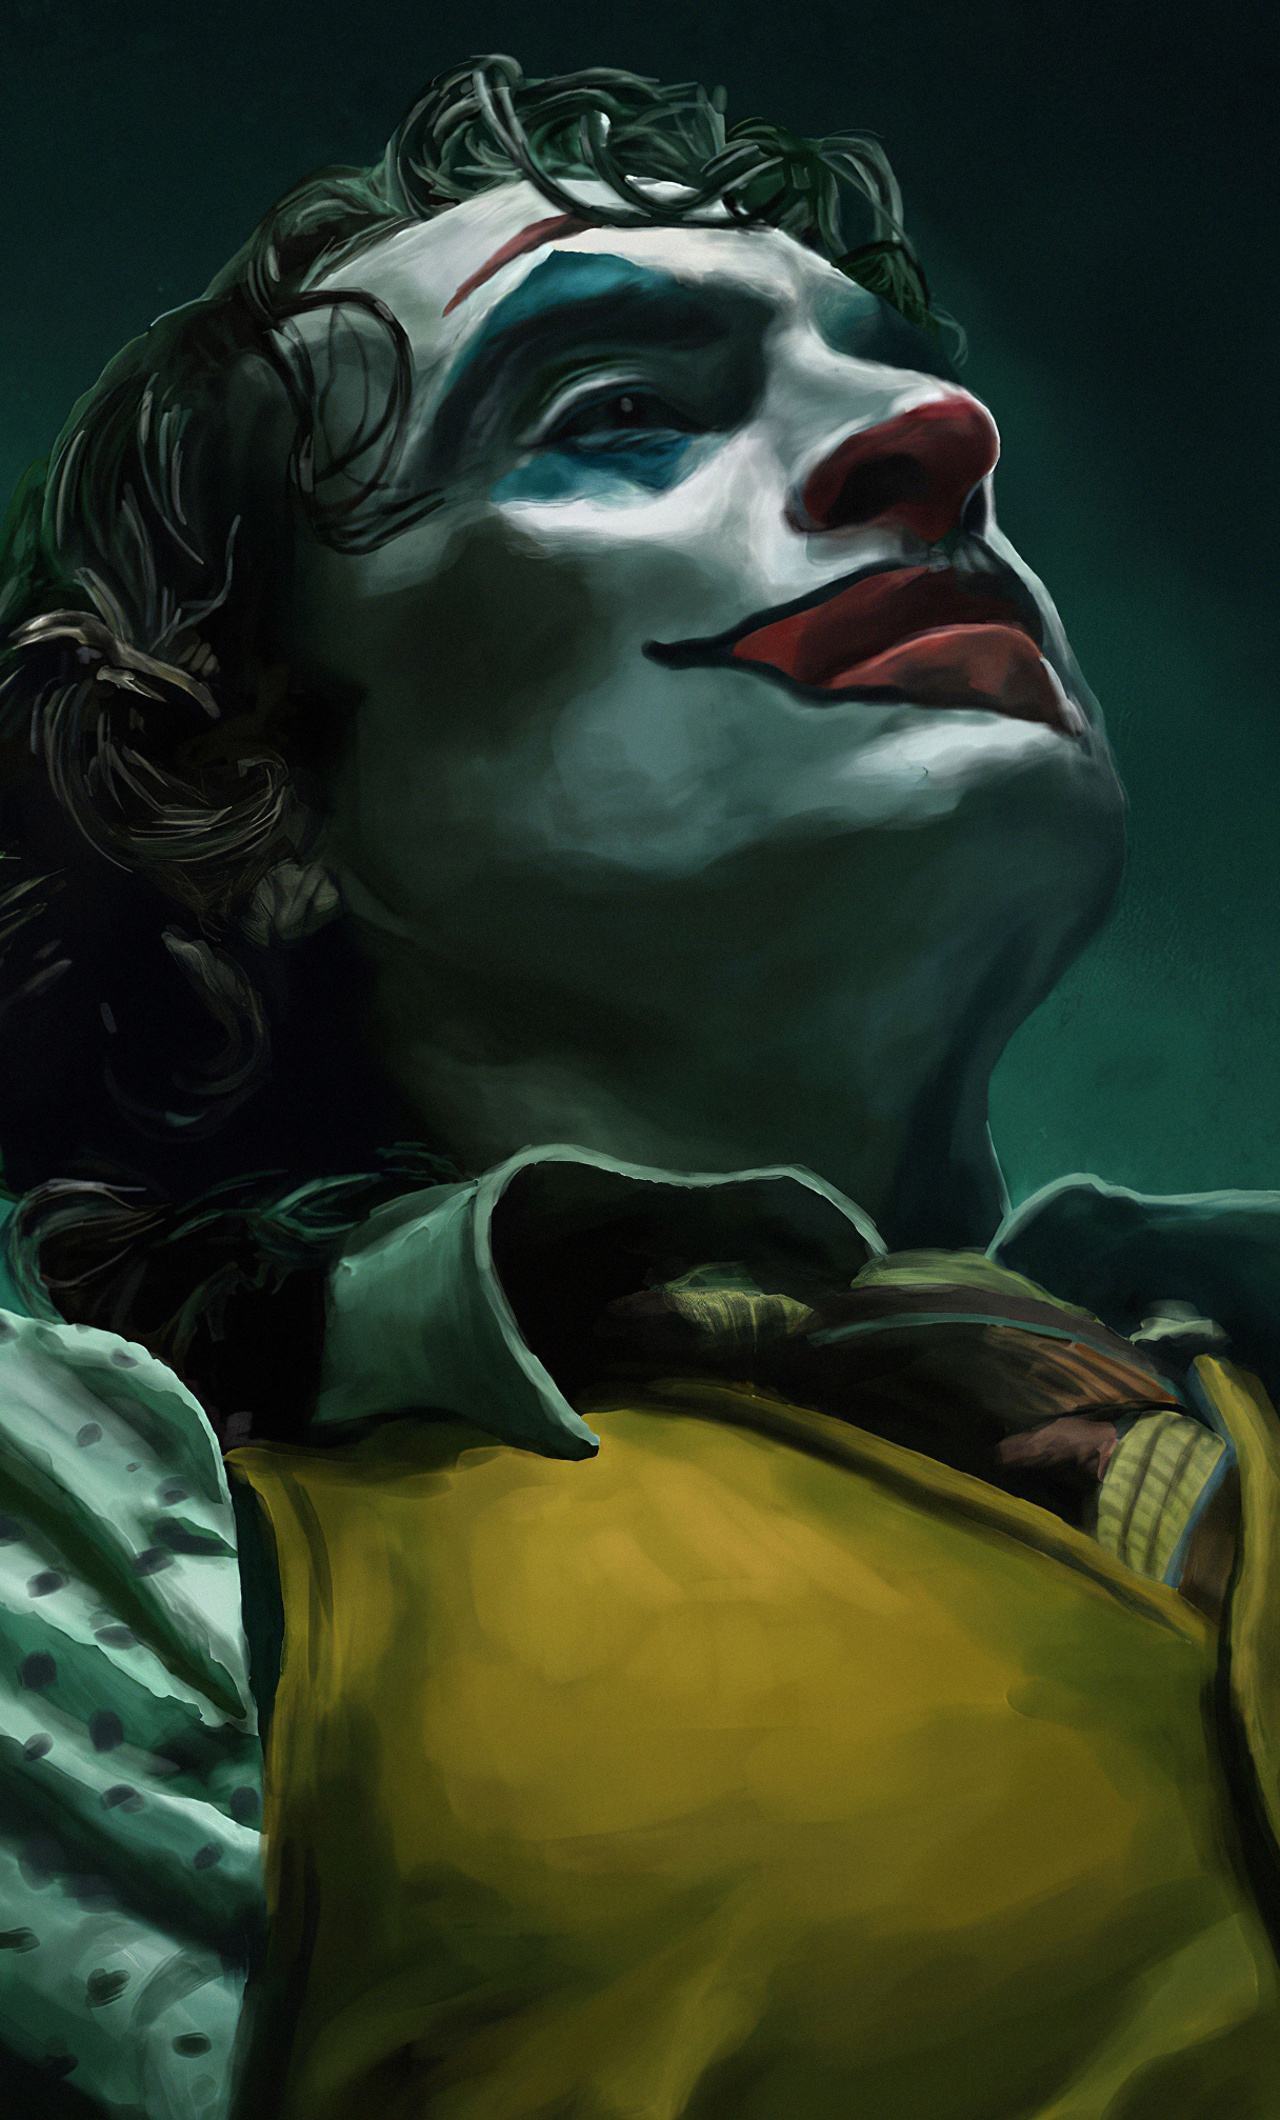 Joker 4k 2020 iPhone HD 4k Wallpaper, Image